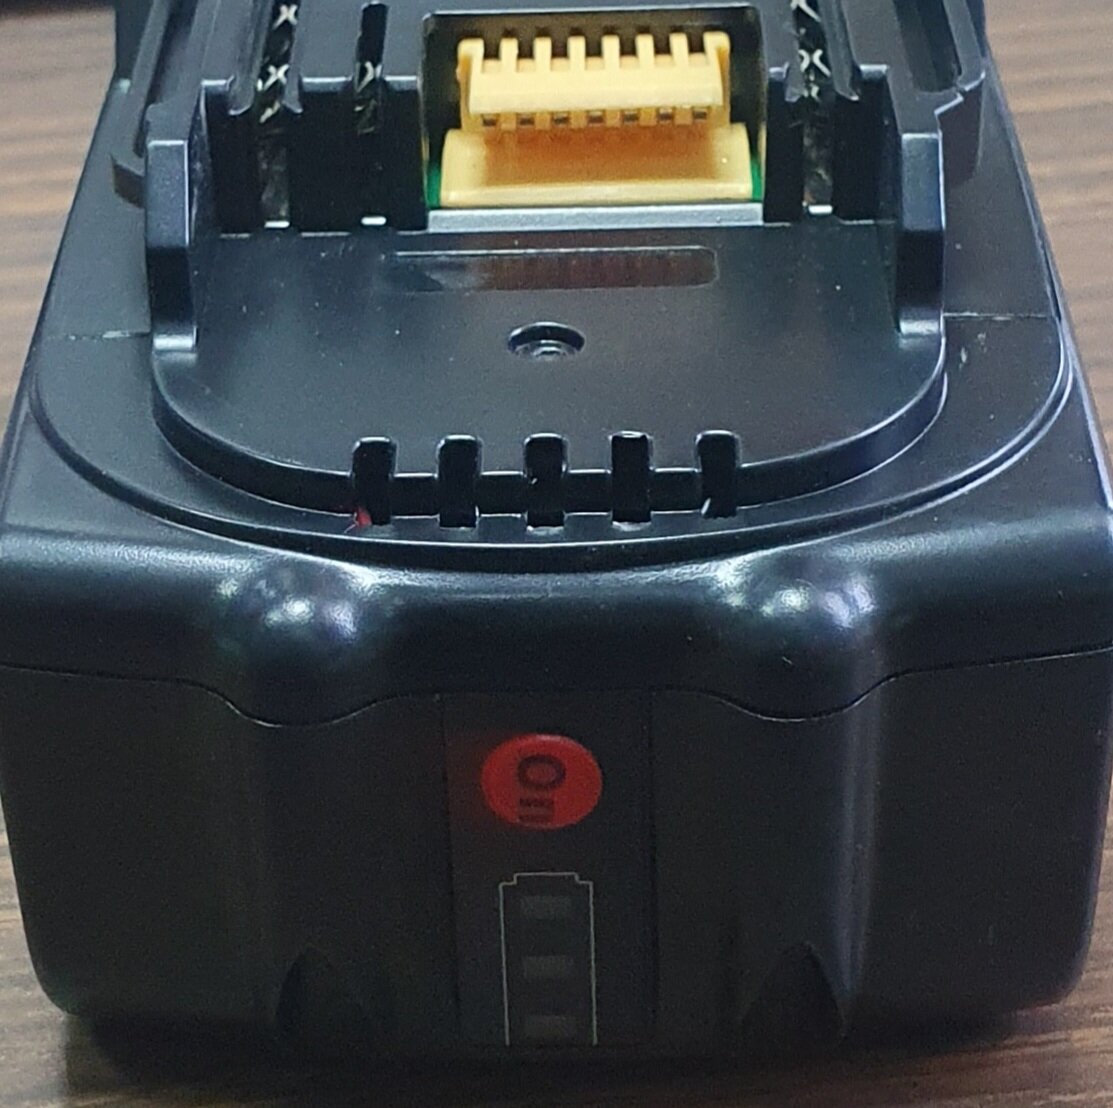 Аккумулятор для Makita 18V 5.0Ah Li-on BL1850B, с индикатором зарядки